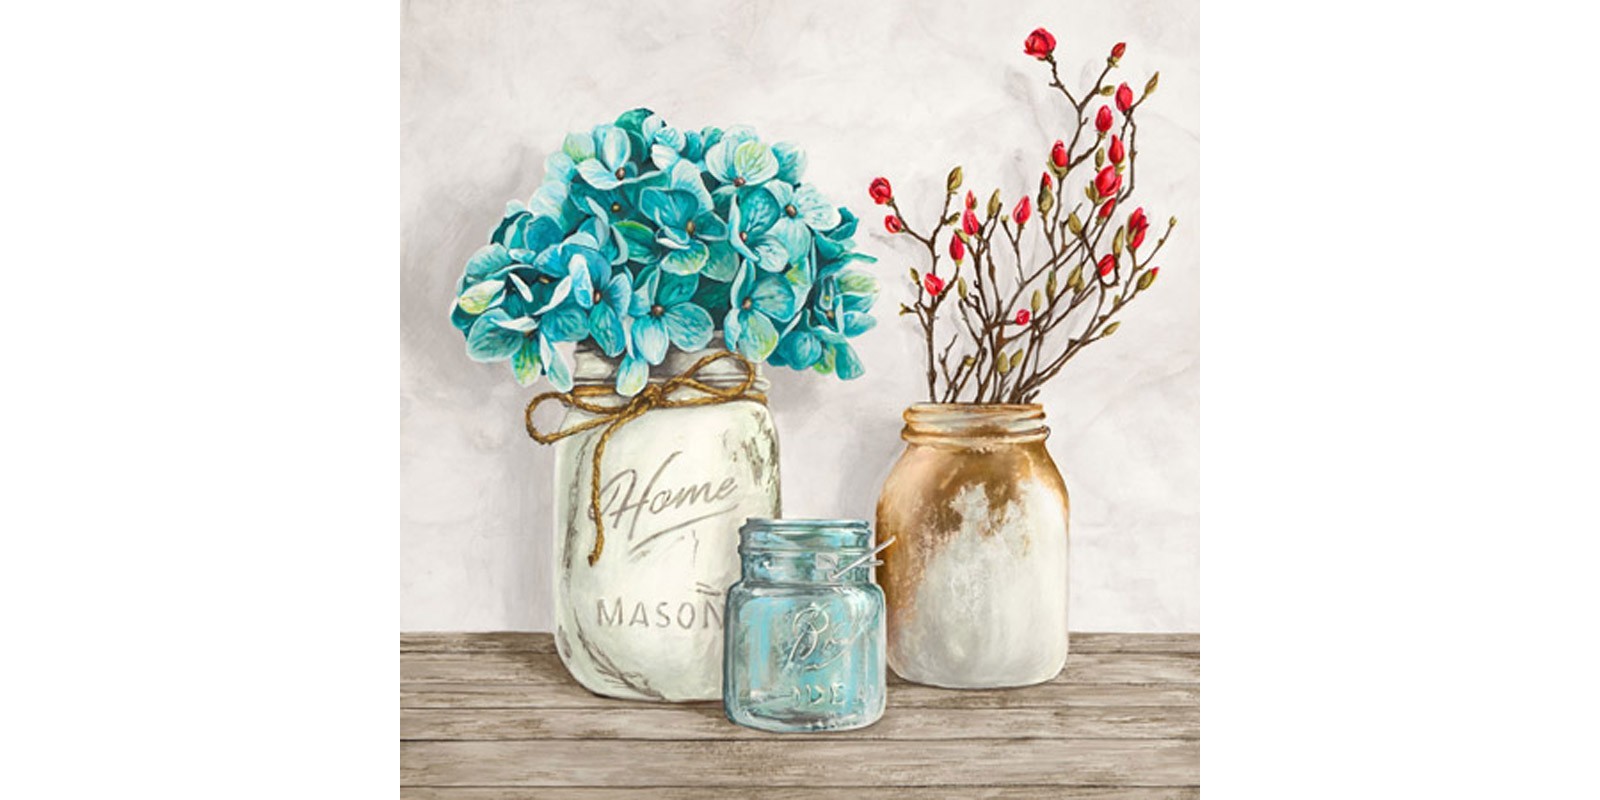 Jenny Thomlinson - Floral composition with Mason Jars I